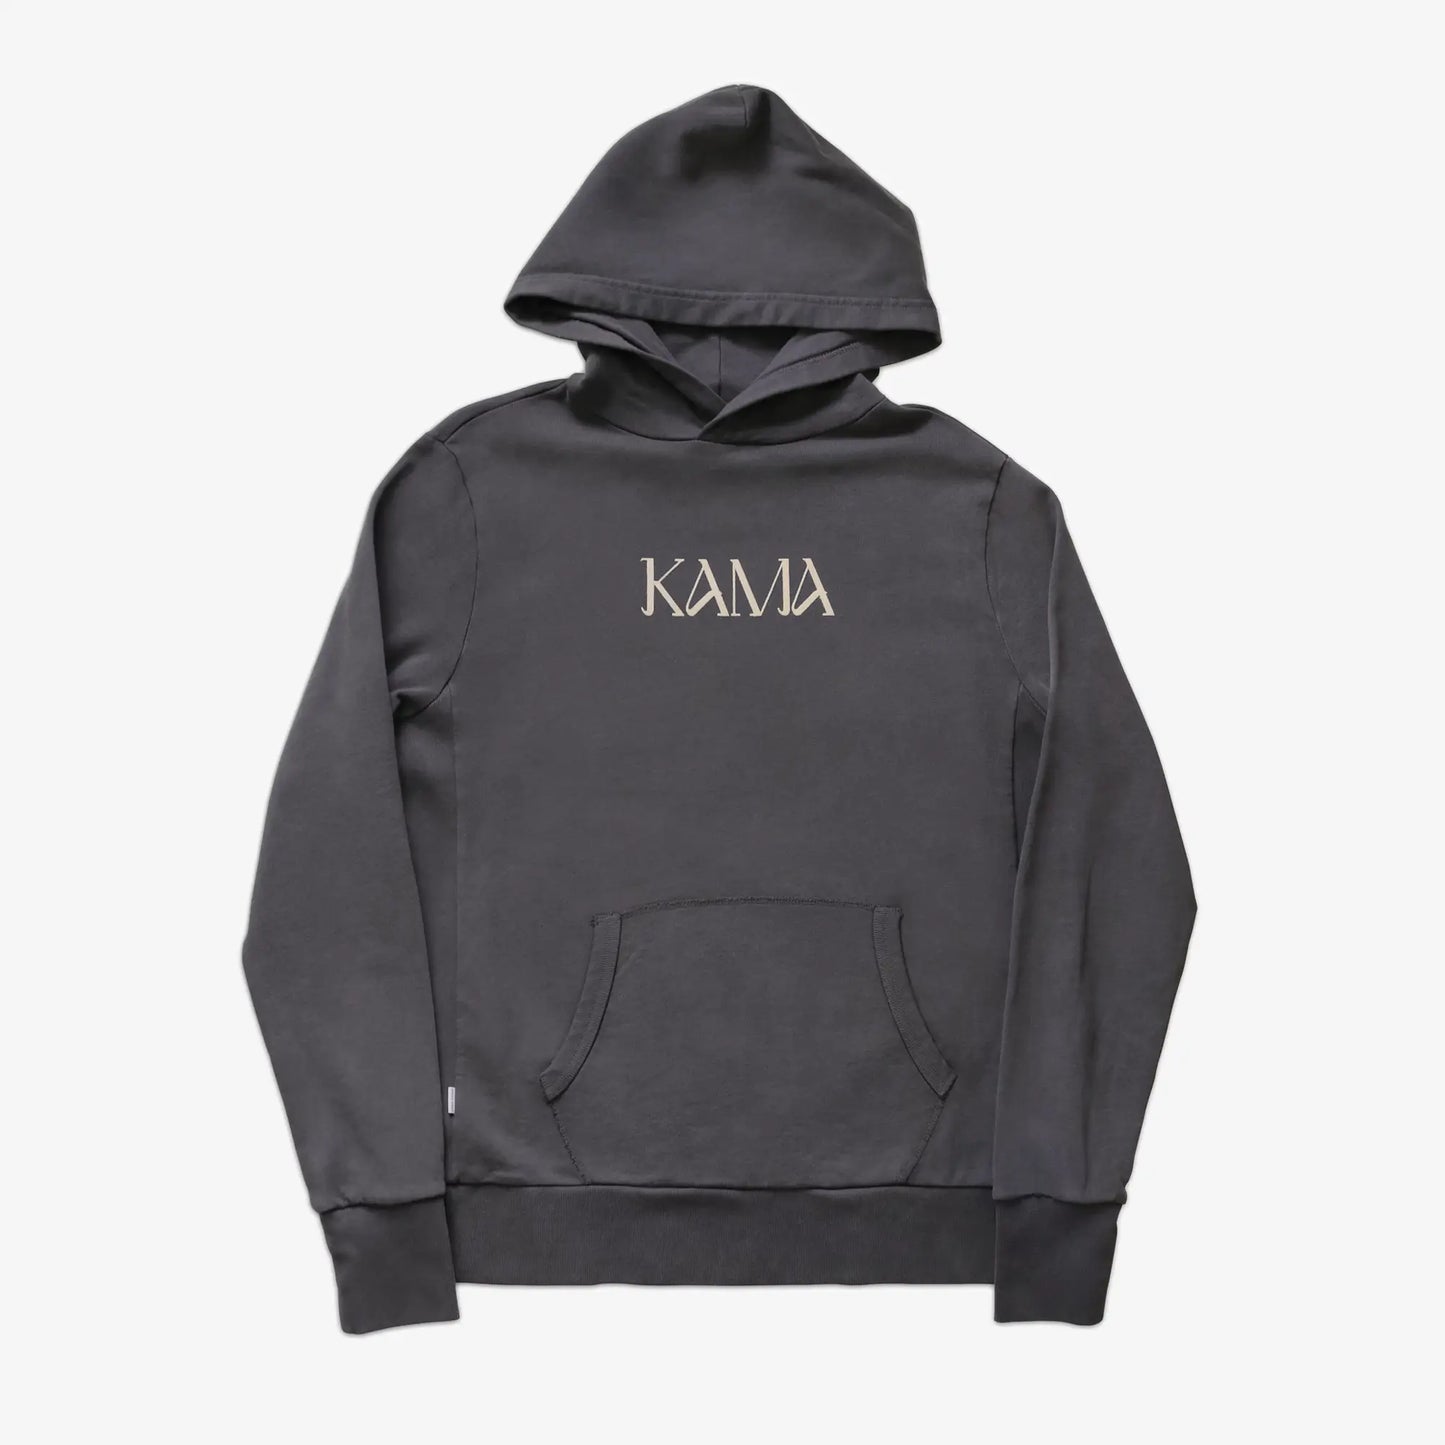 KAMA Flock AKASHI-KAMA Hoodie in Slate | Streetwear Garment Dye Sweatshirt Made in USA